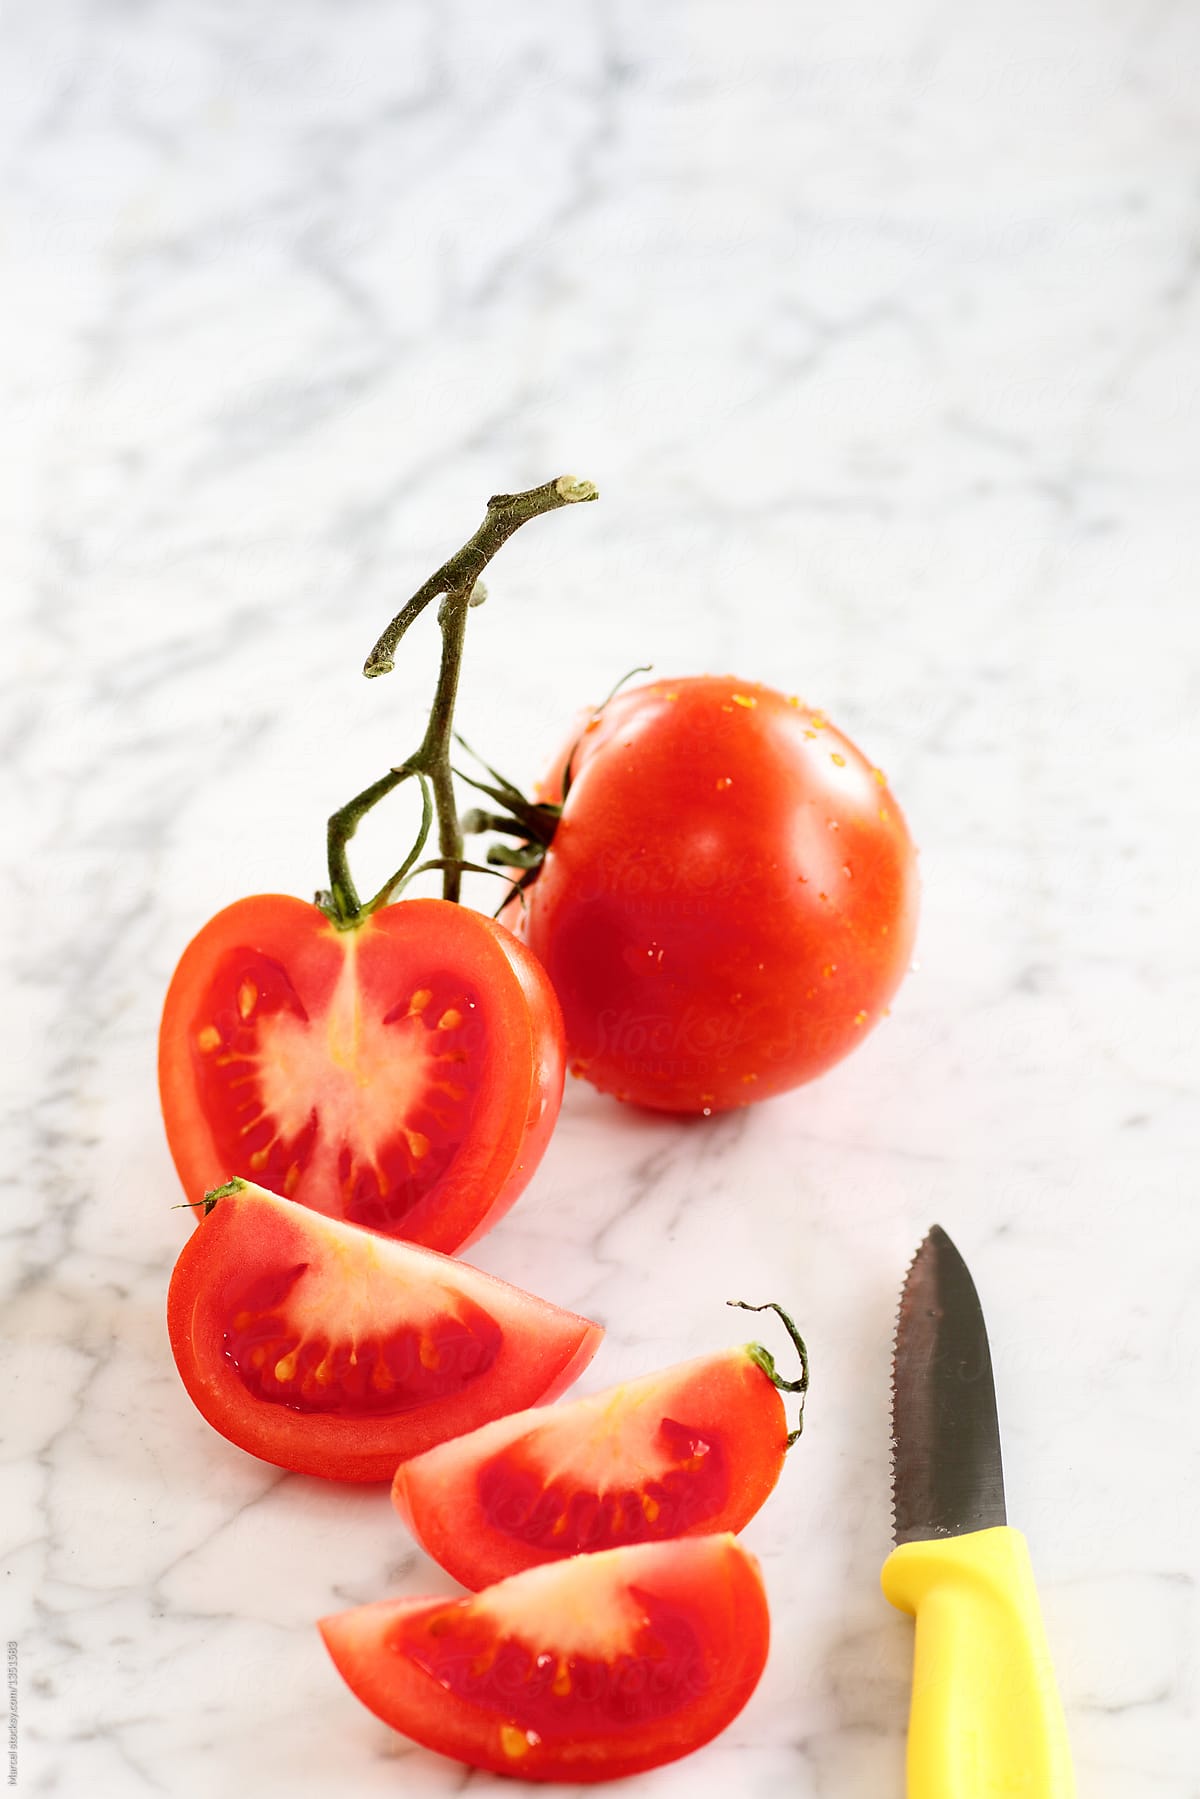 Tomato cut in pieces